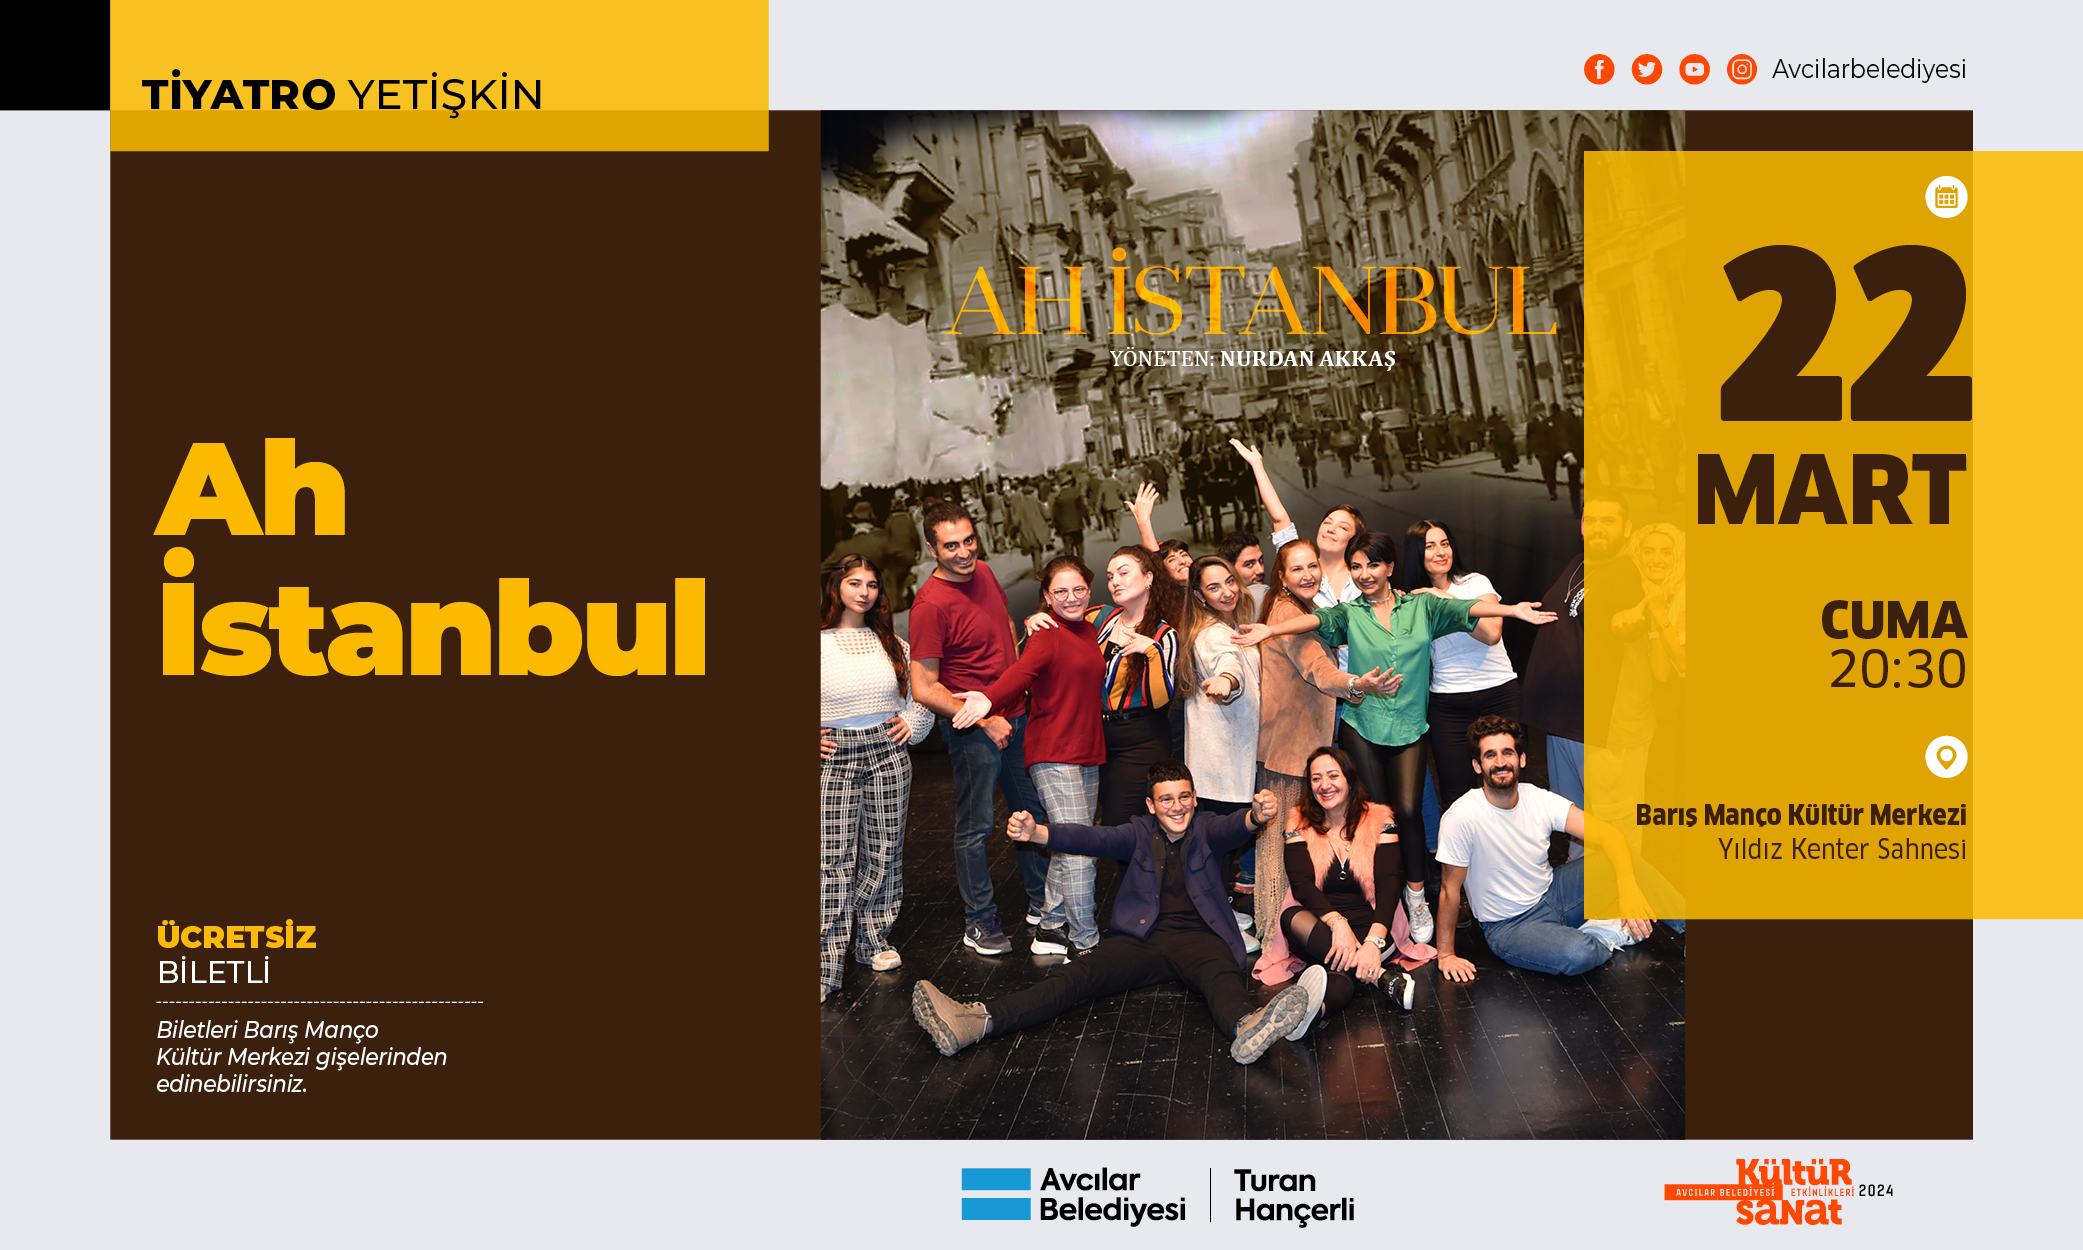 Ah İstanbul (tiyatro yetişkin)